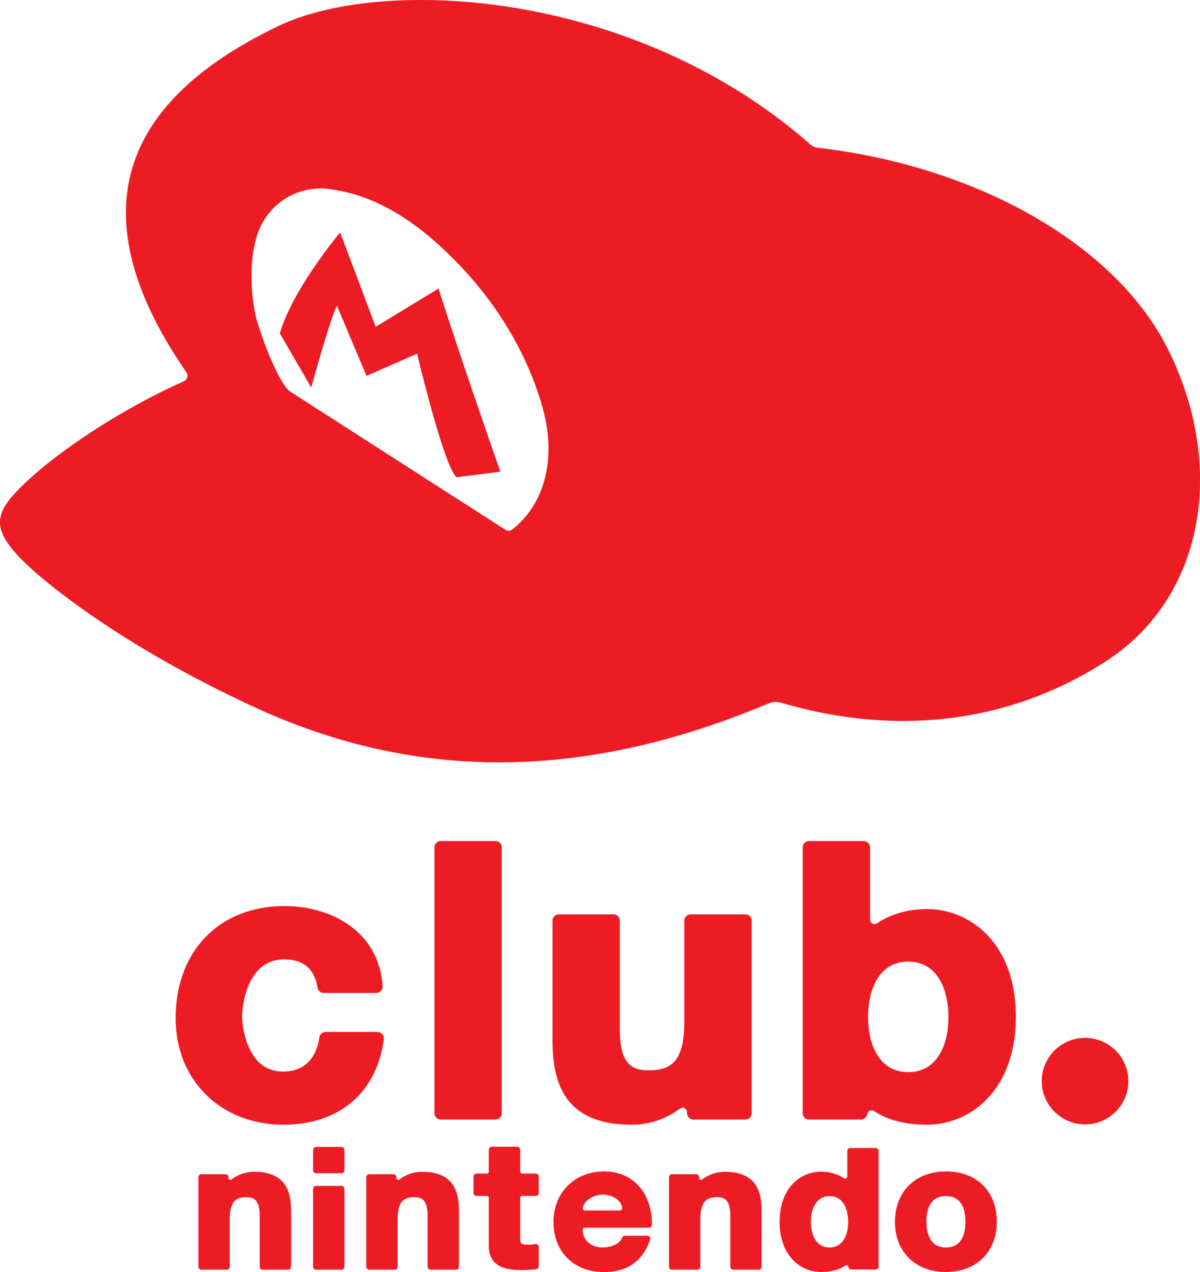 Nintendo club. Nintendo логотип. Nintendo logo. Nintendo logo 1024x1024. Nintendo logo 2400x2400.